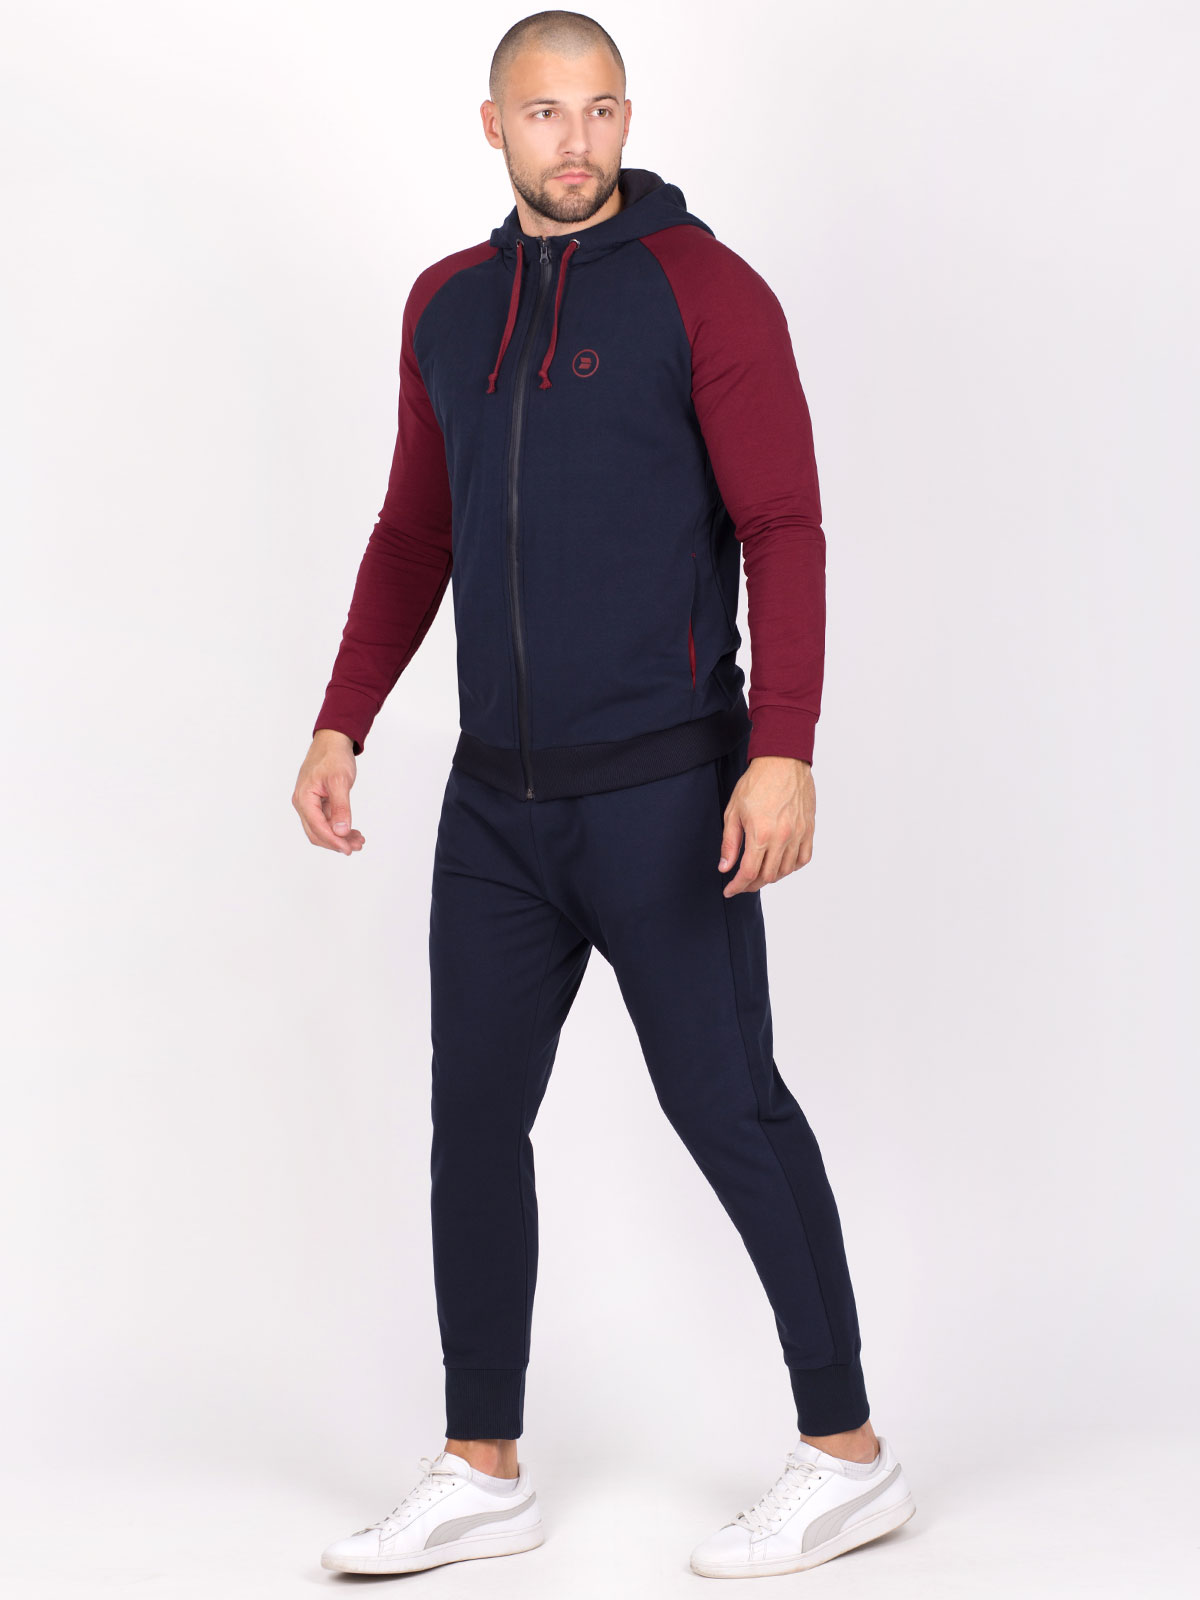 Sweatshirt in burgundy and navy blue - 28107 € 50.06 img3